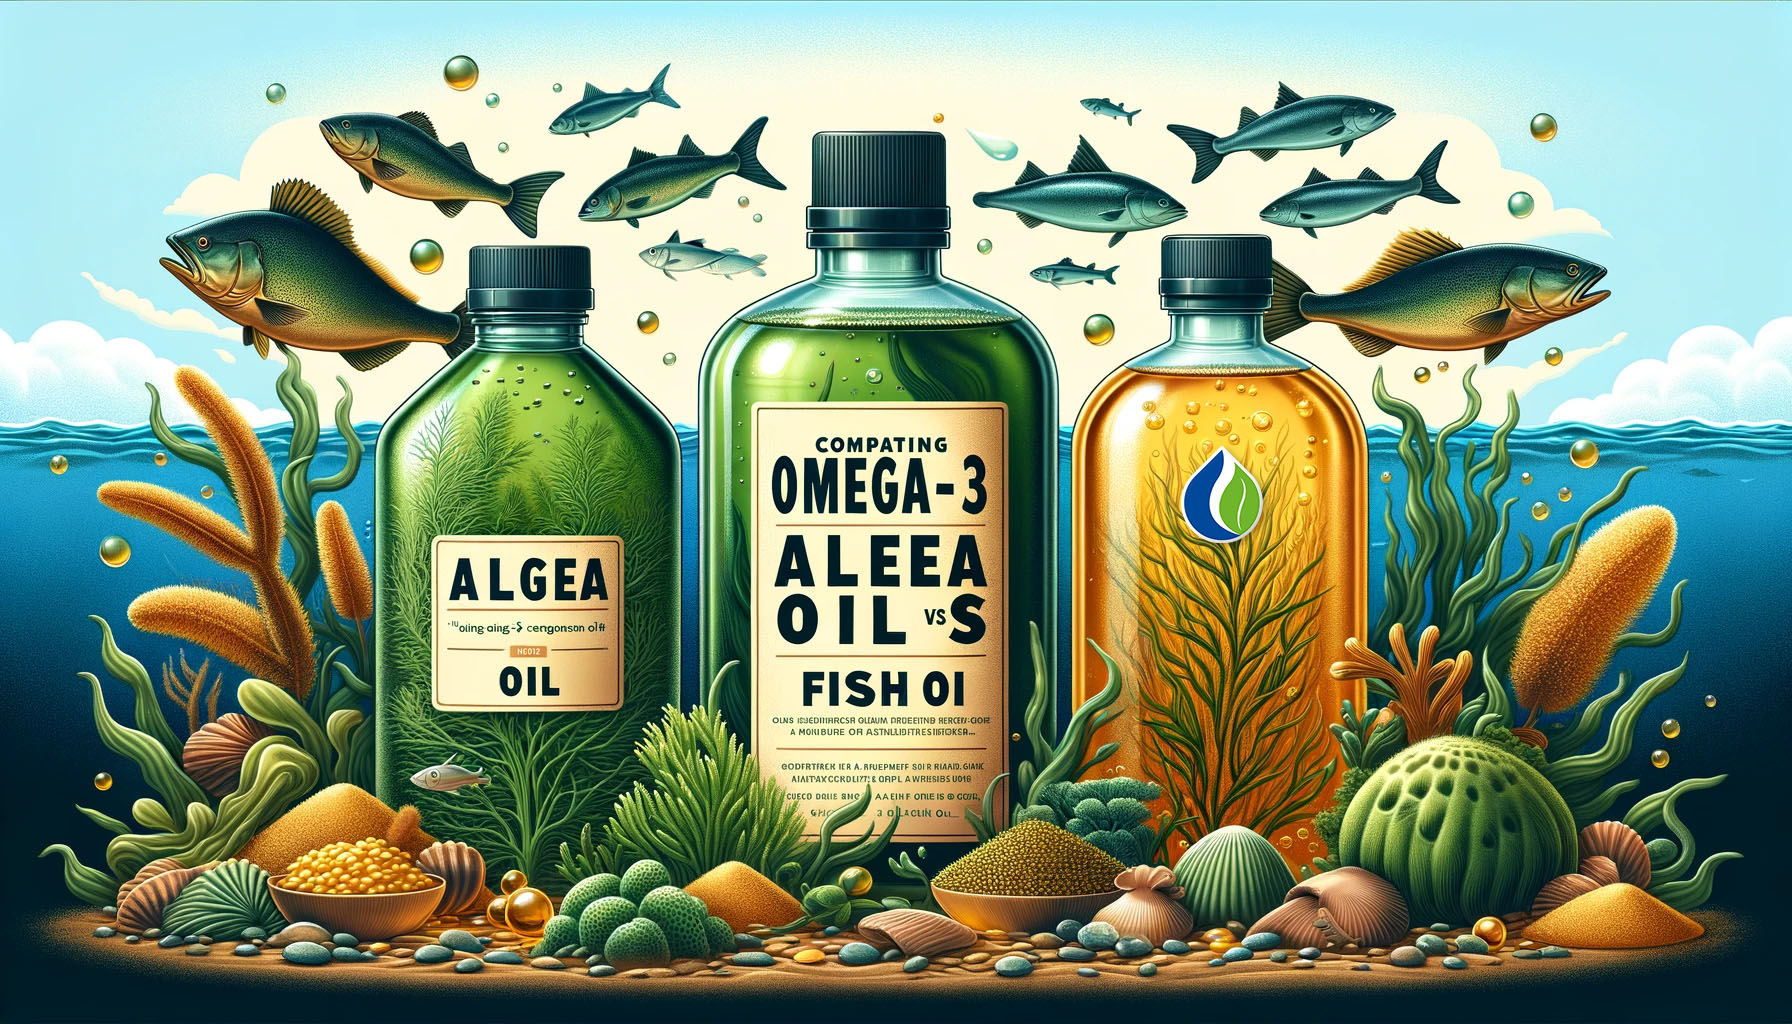 Comparing Omega-3 sources: Algae oil vs fish oil